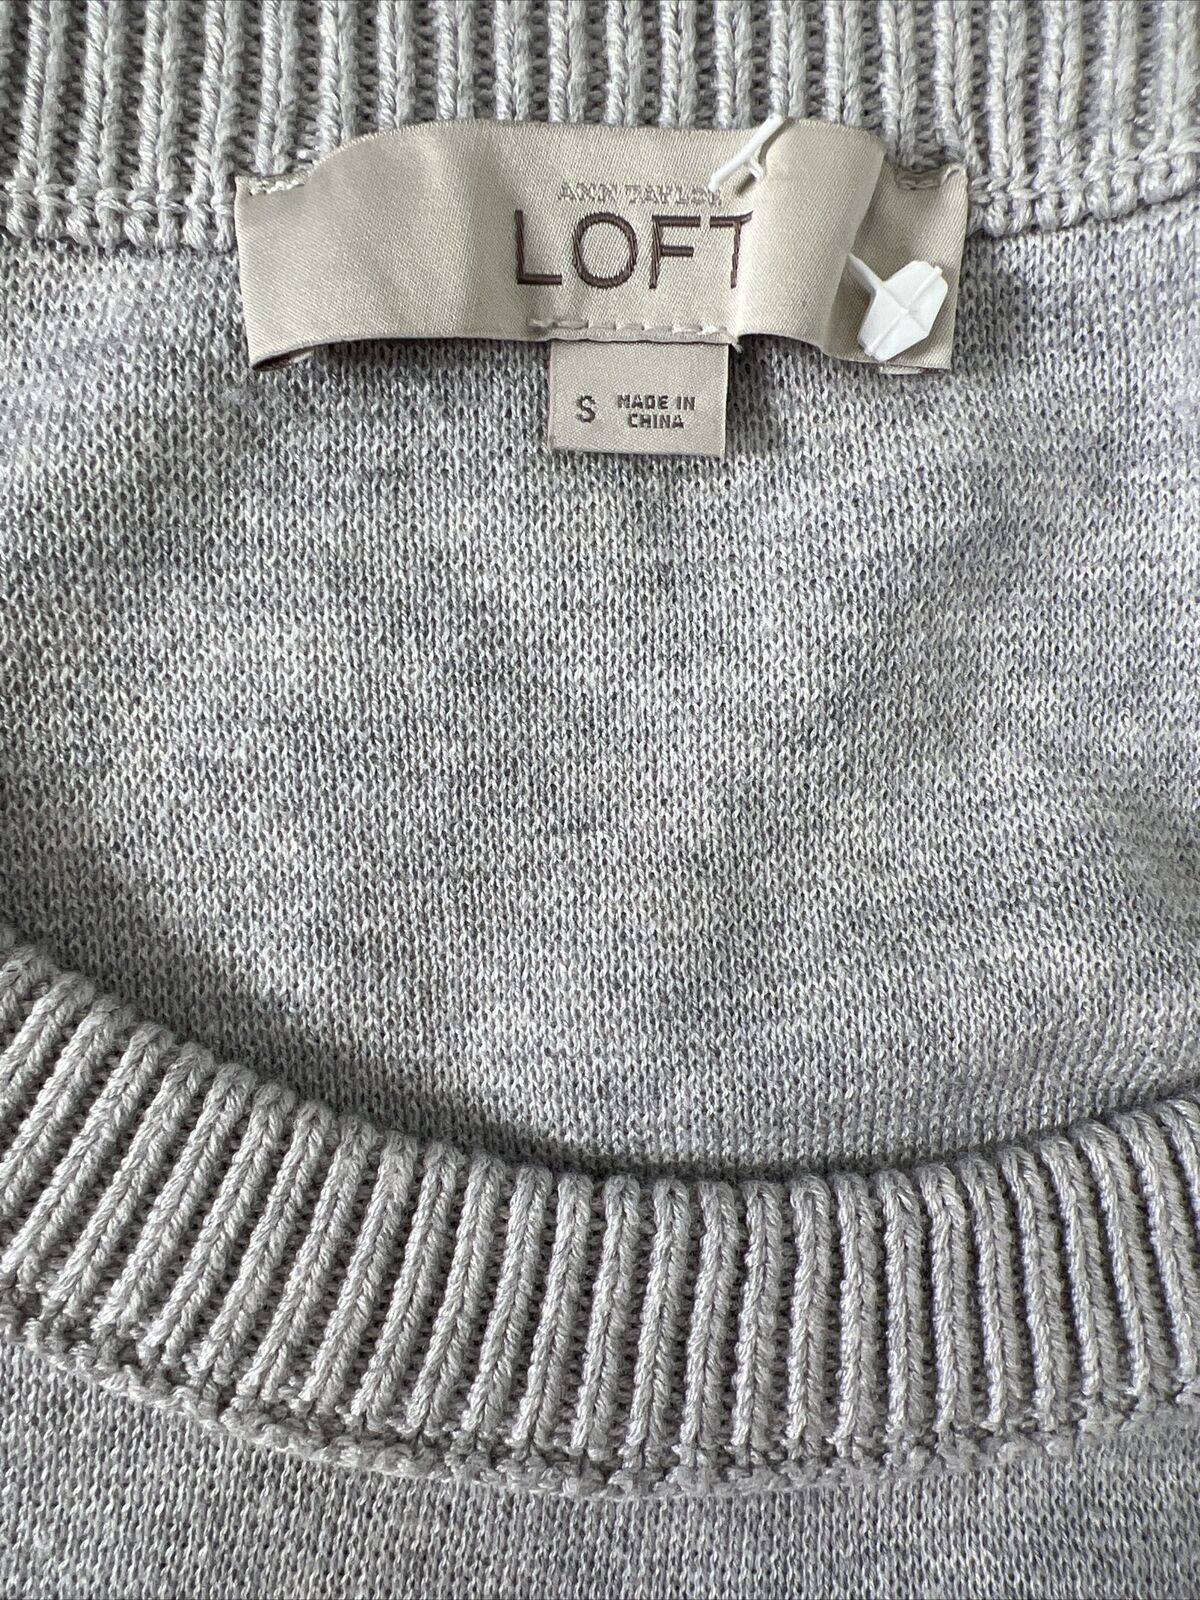 LOFT Women's Gray Beaded Accent Knit Sweater - S